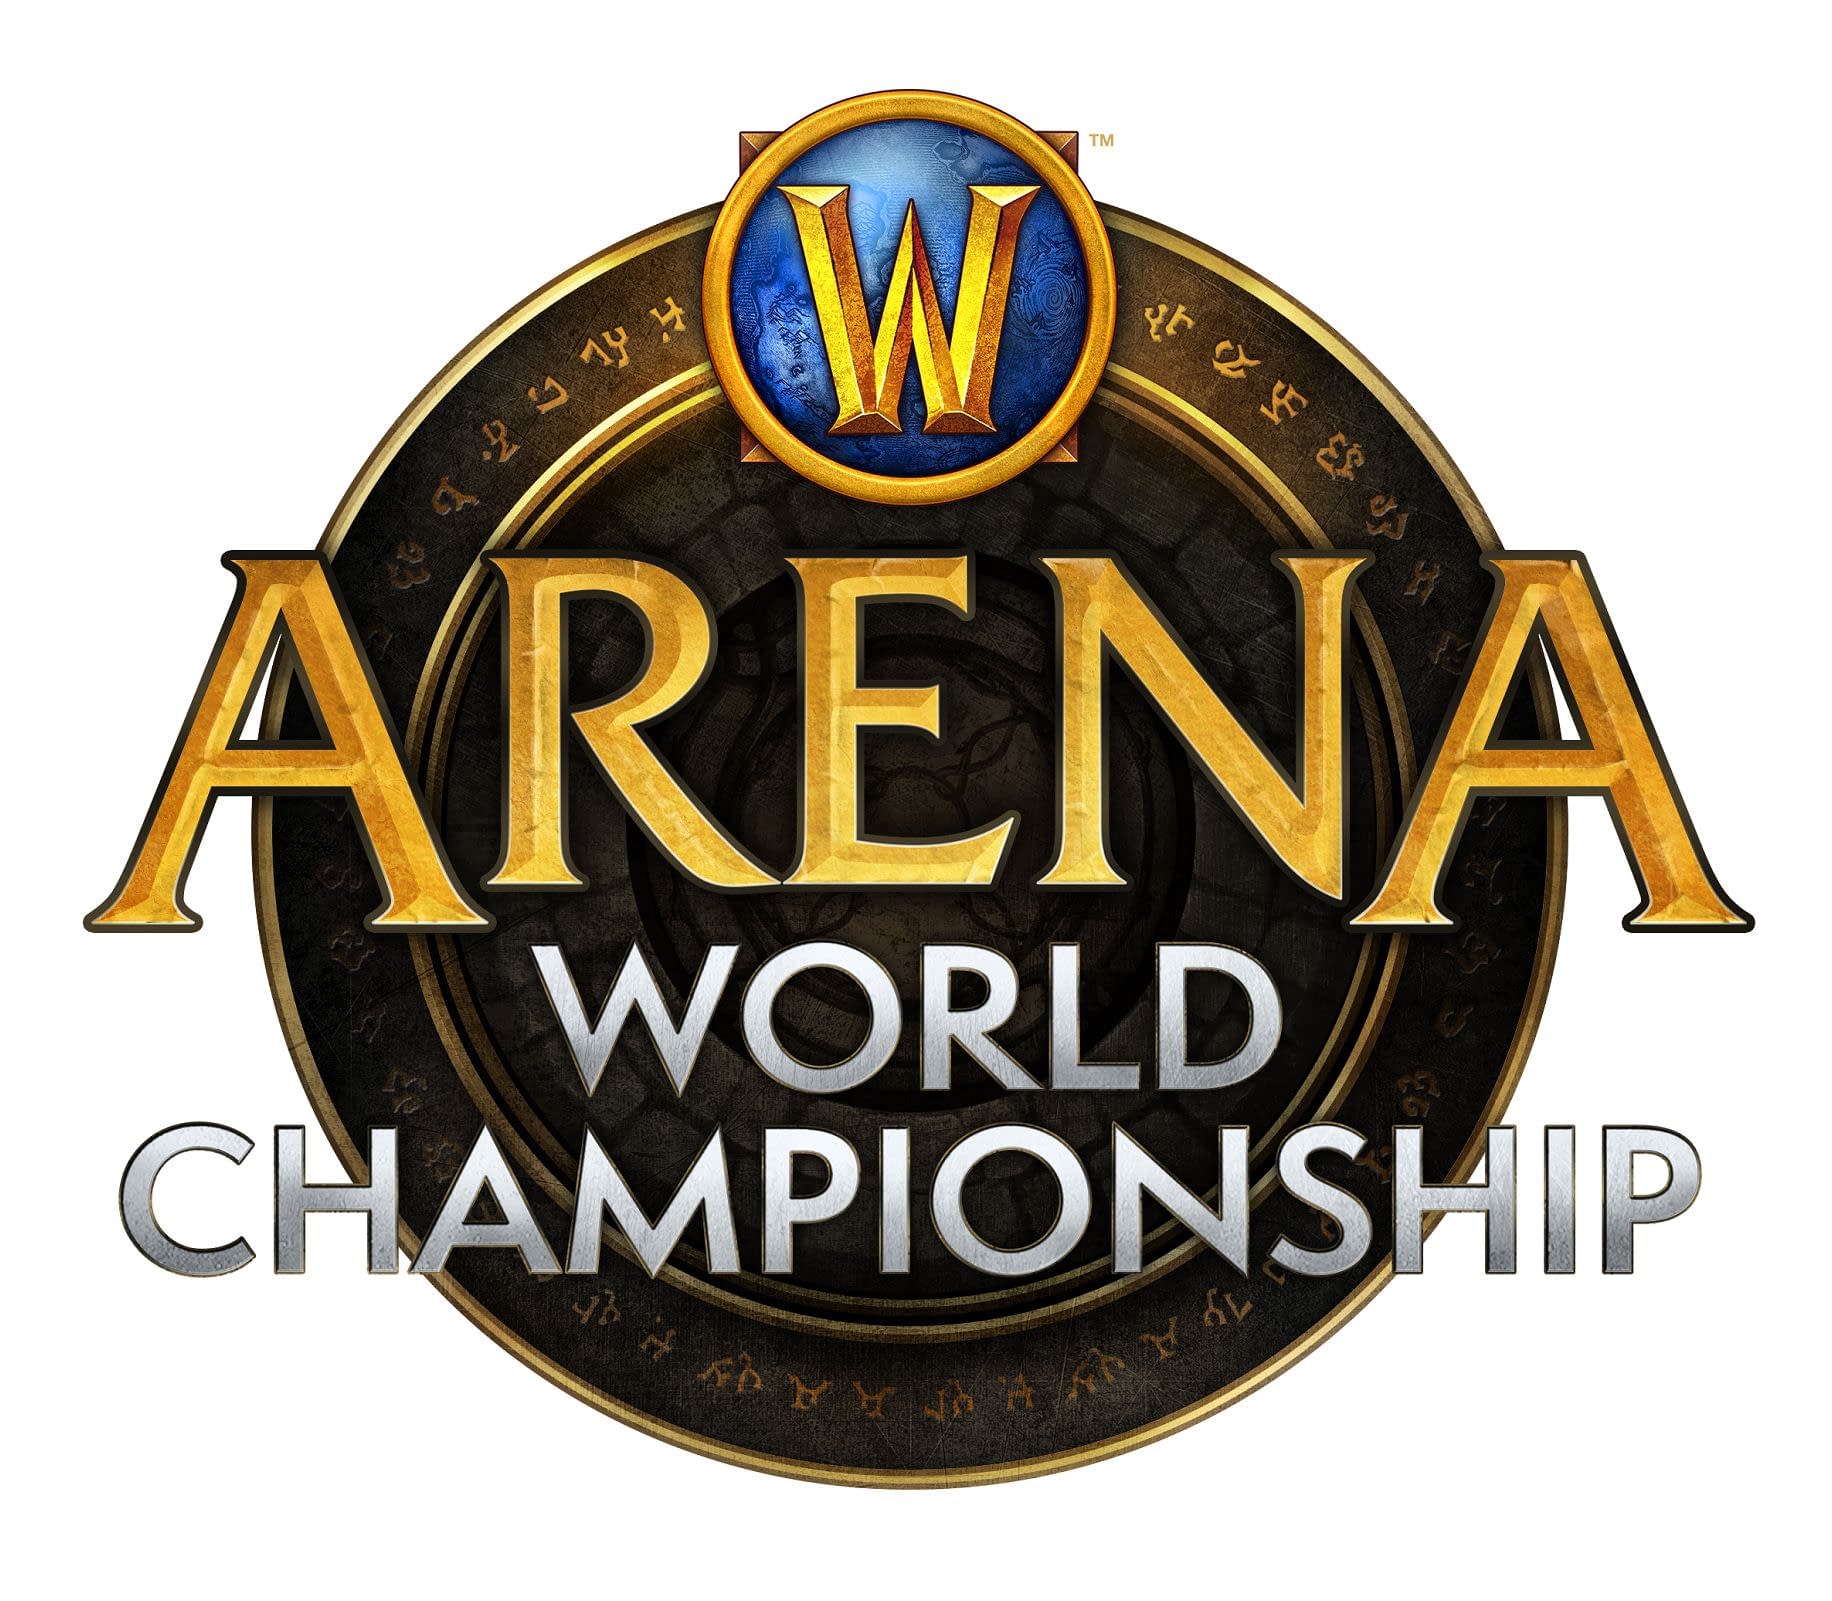 Orient patrice Reception Blizzard Reveals 2021 Plans For Multiple Warcraft Esports